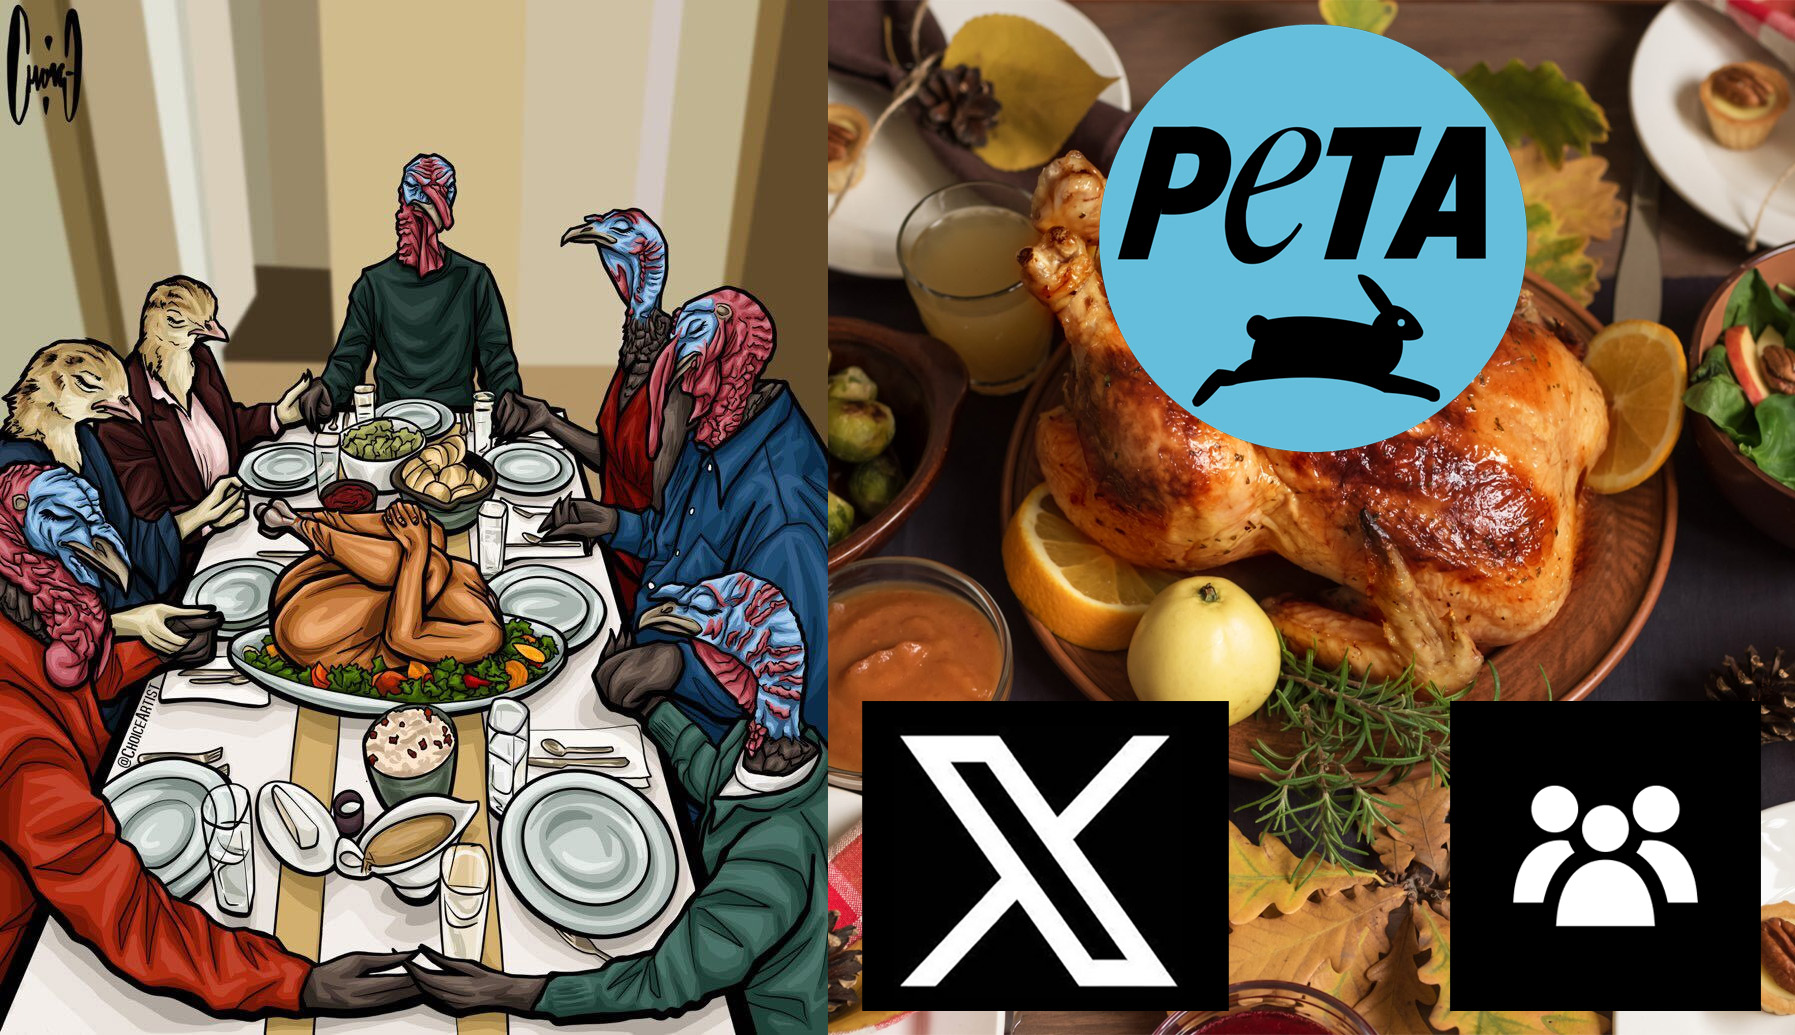 Turkeys are not vegan: PETA's non-stop preaching ahead of Thanksgiving ...